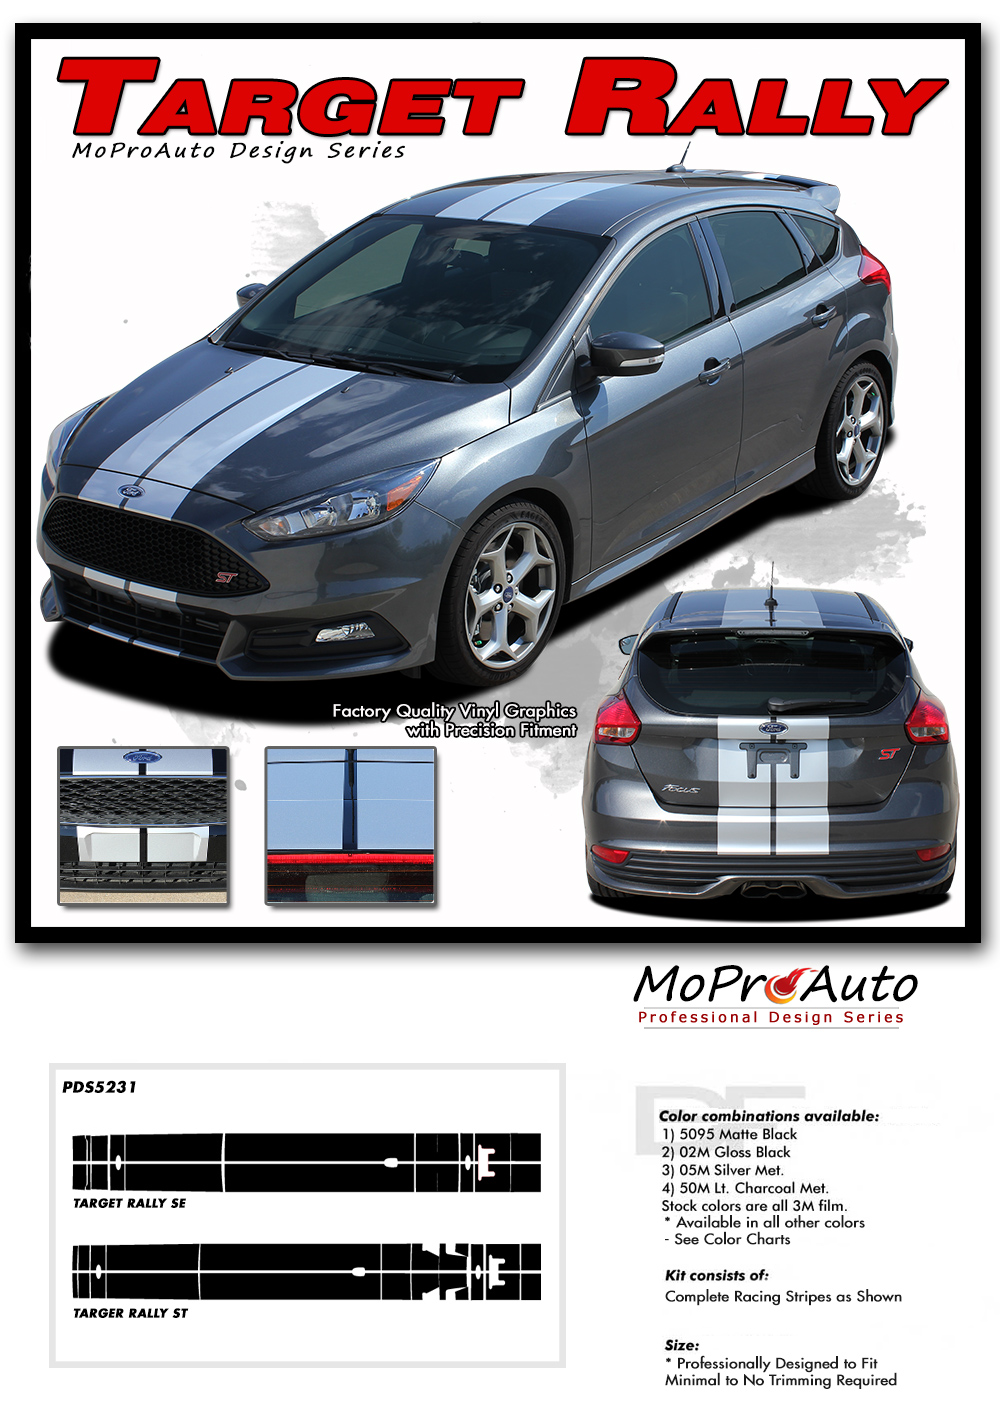 2015 2016 2017 2018 TARGET RALLY Ford Focus Racing Stripes Decals Vinyl Graphics - MoProAuto Pro Design Series Original Kit